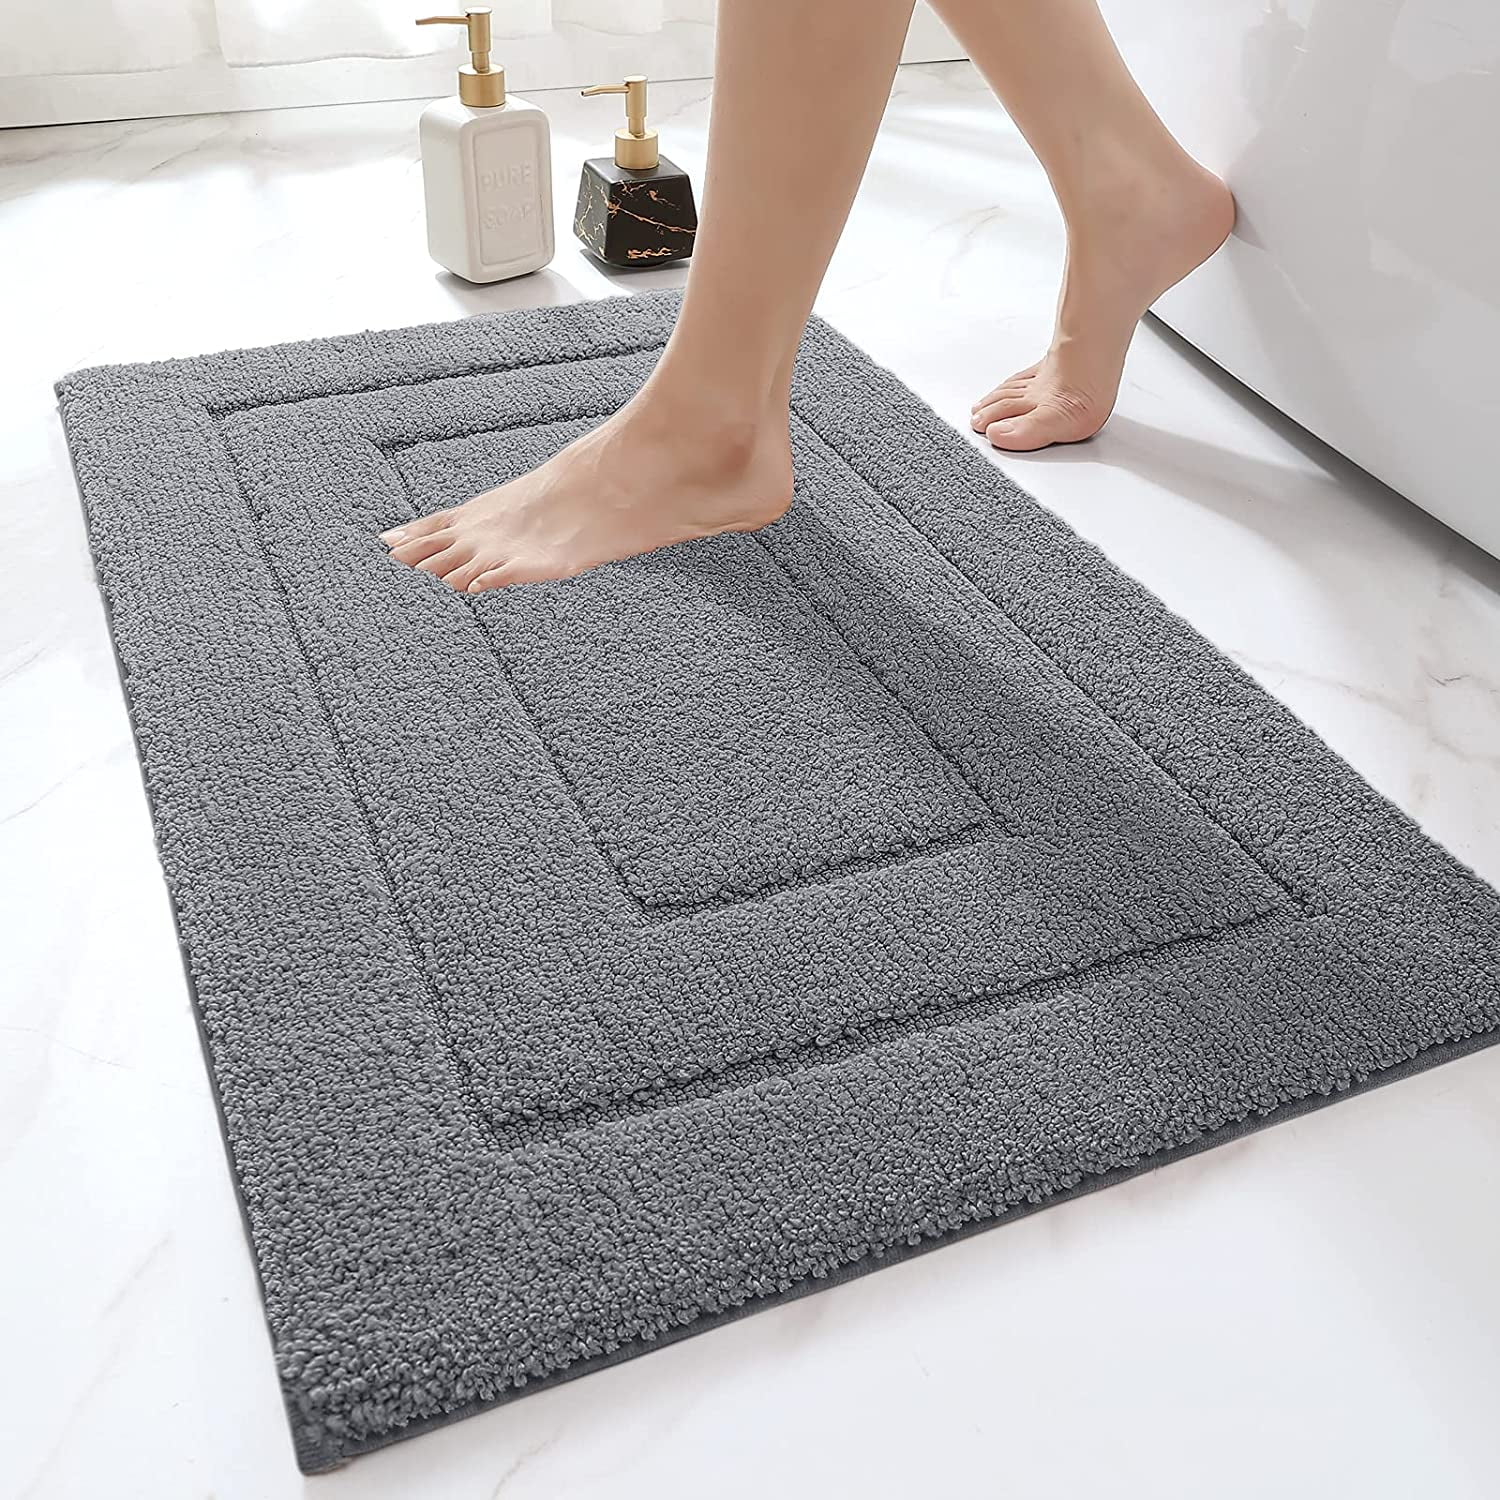 Color G 40 X 60cm Microfiber Soft Bath Mat, Non-slip Bathroom Mats Machine- washable, Shower Water Absorbent Bath Rug Durable Floor Mats (grey)